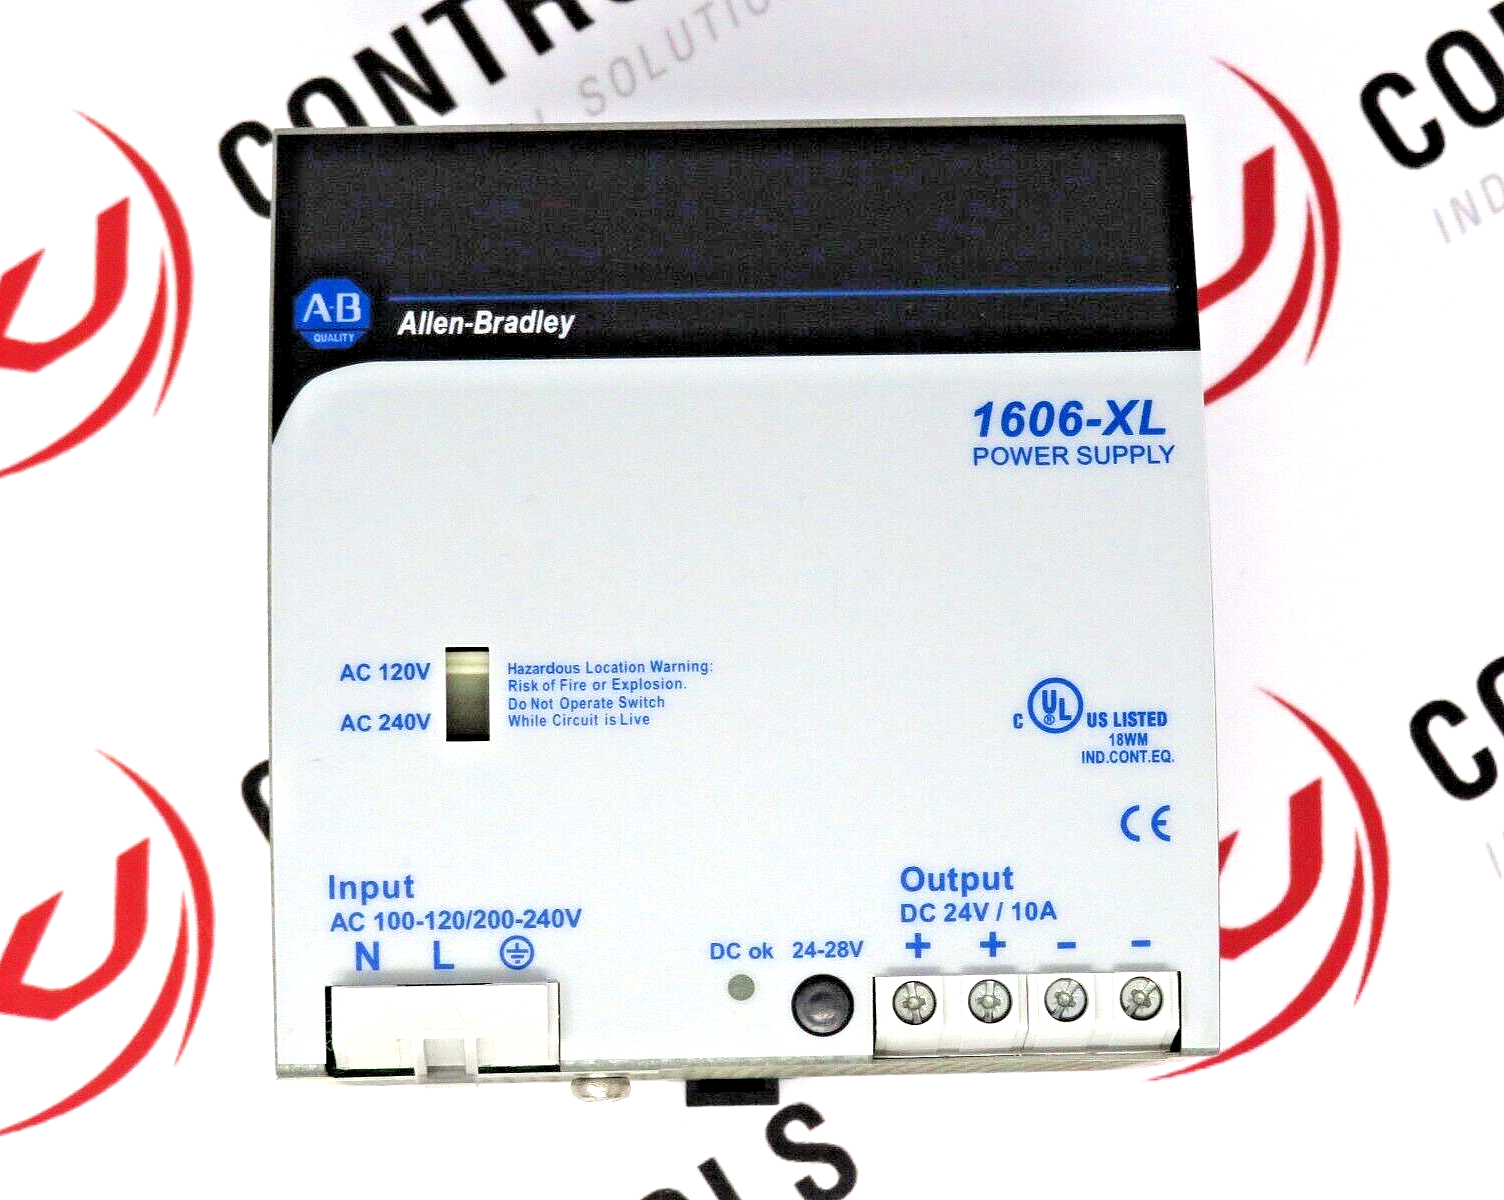 Allen-Bradley 1606-XL240E Power Supply Module DIN Mount 24-28 VDC Output 10A